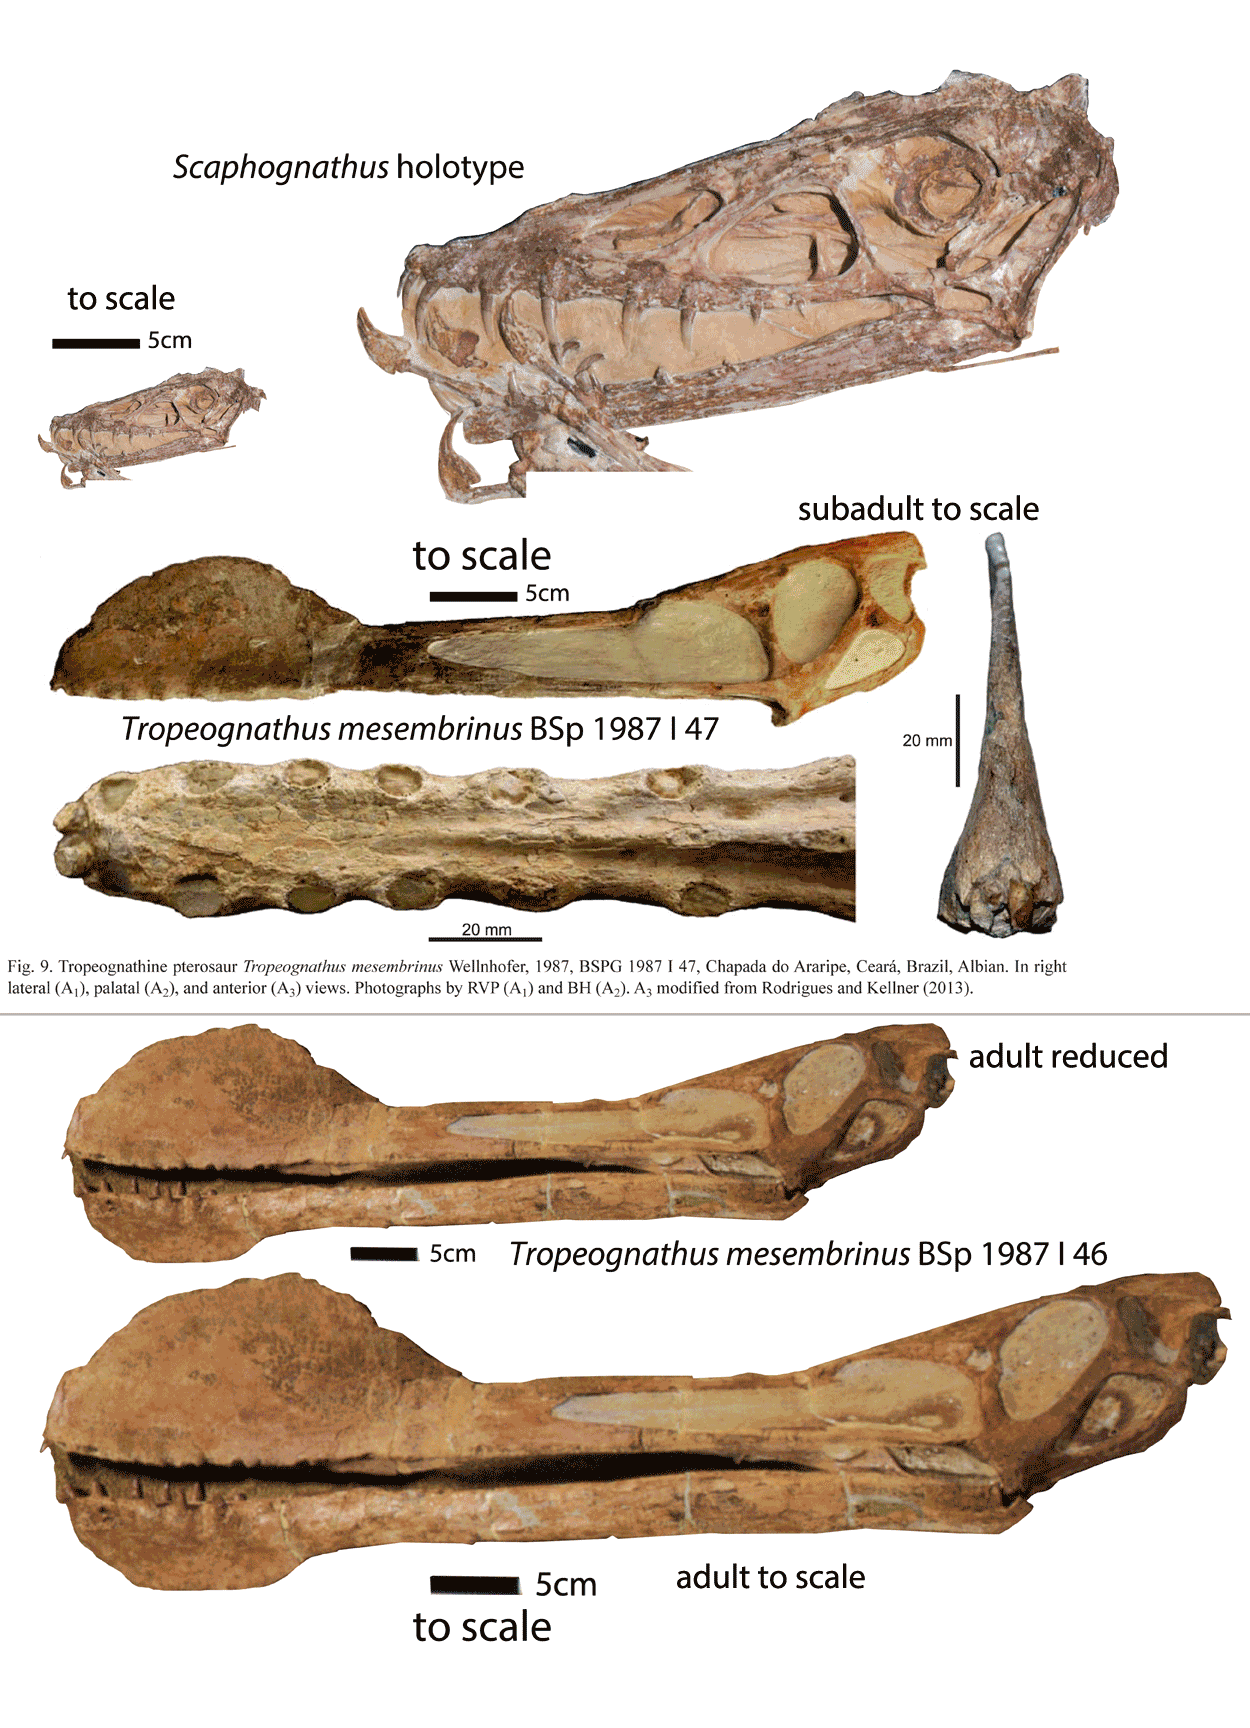 Tropeognathus and Scaphognathus